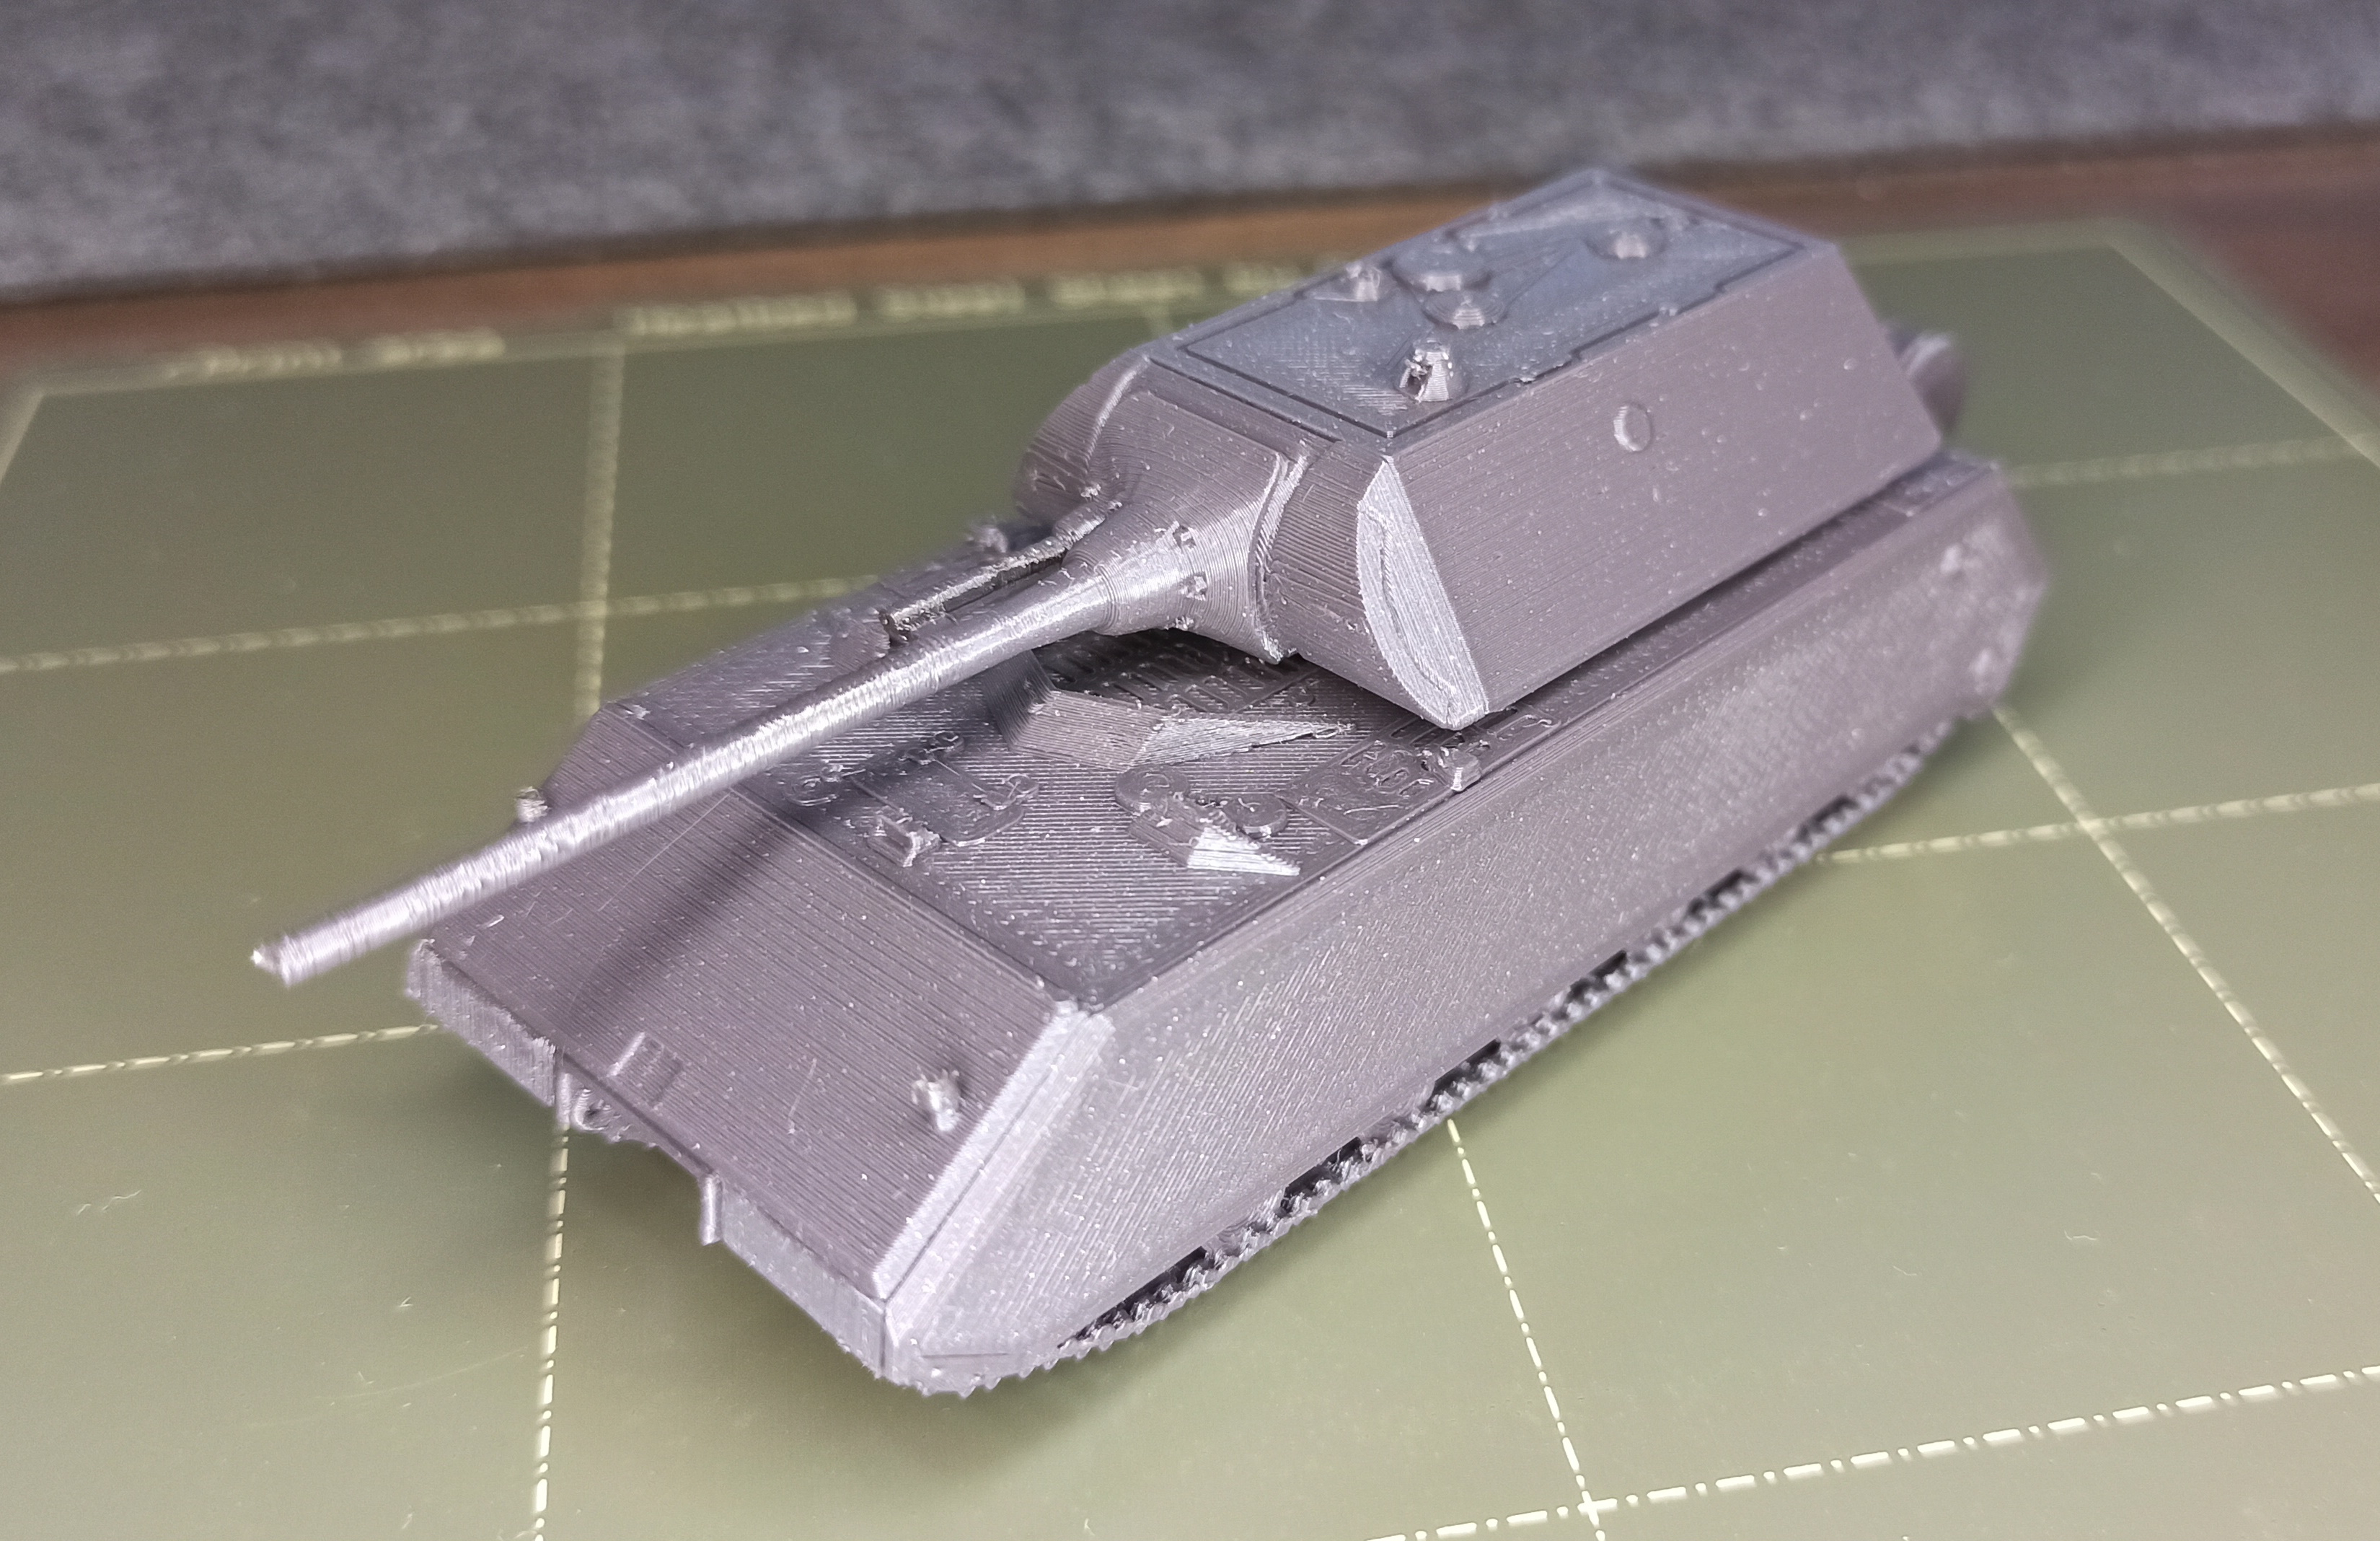 Panzer VIII "Maus" Tank